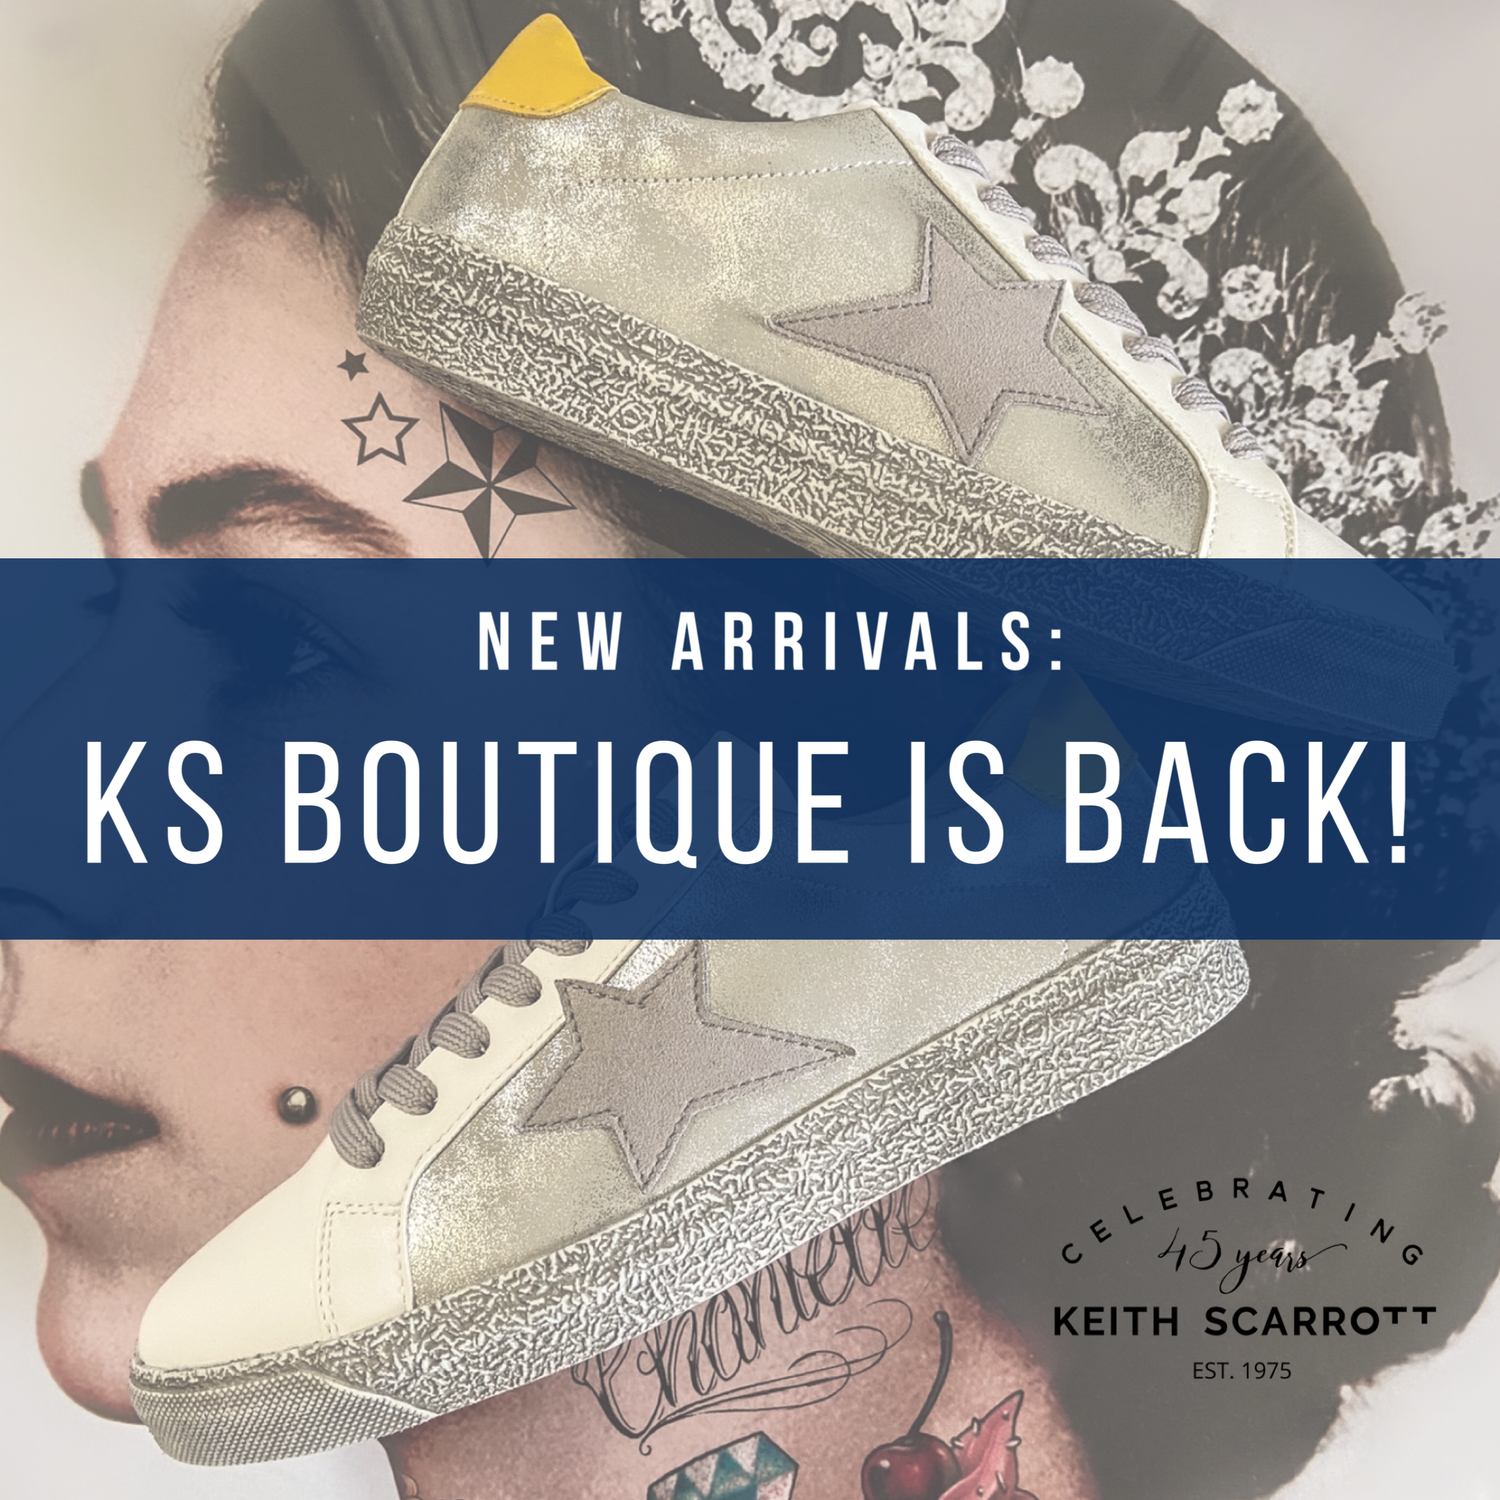 KS boutique is back